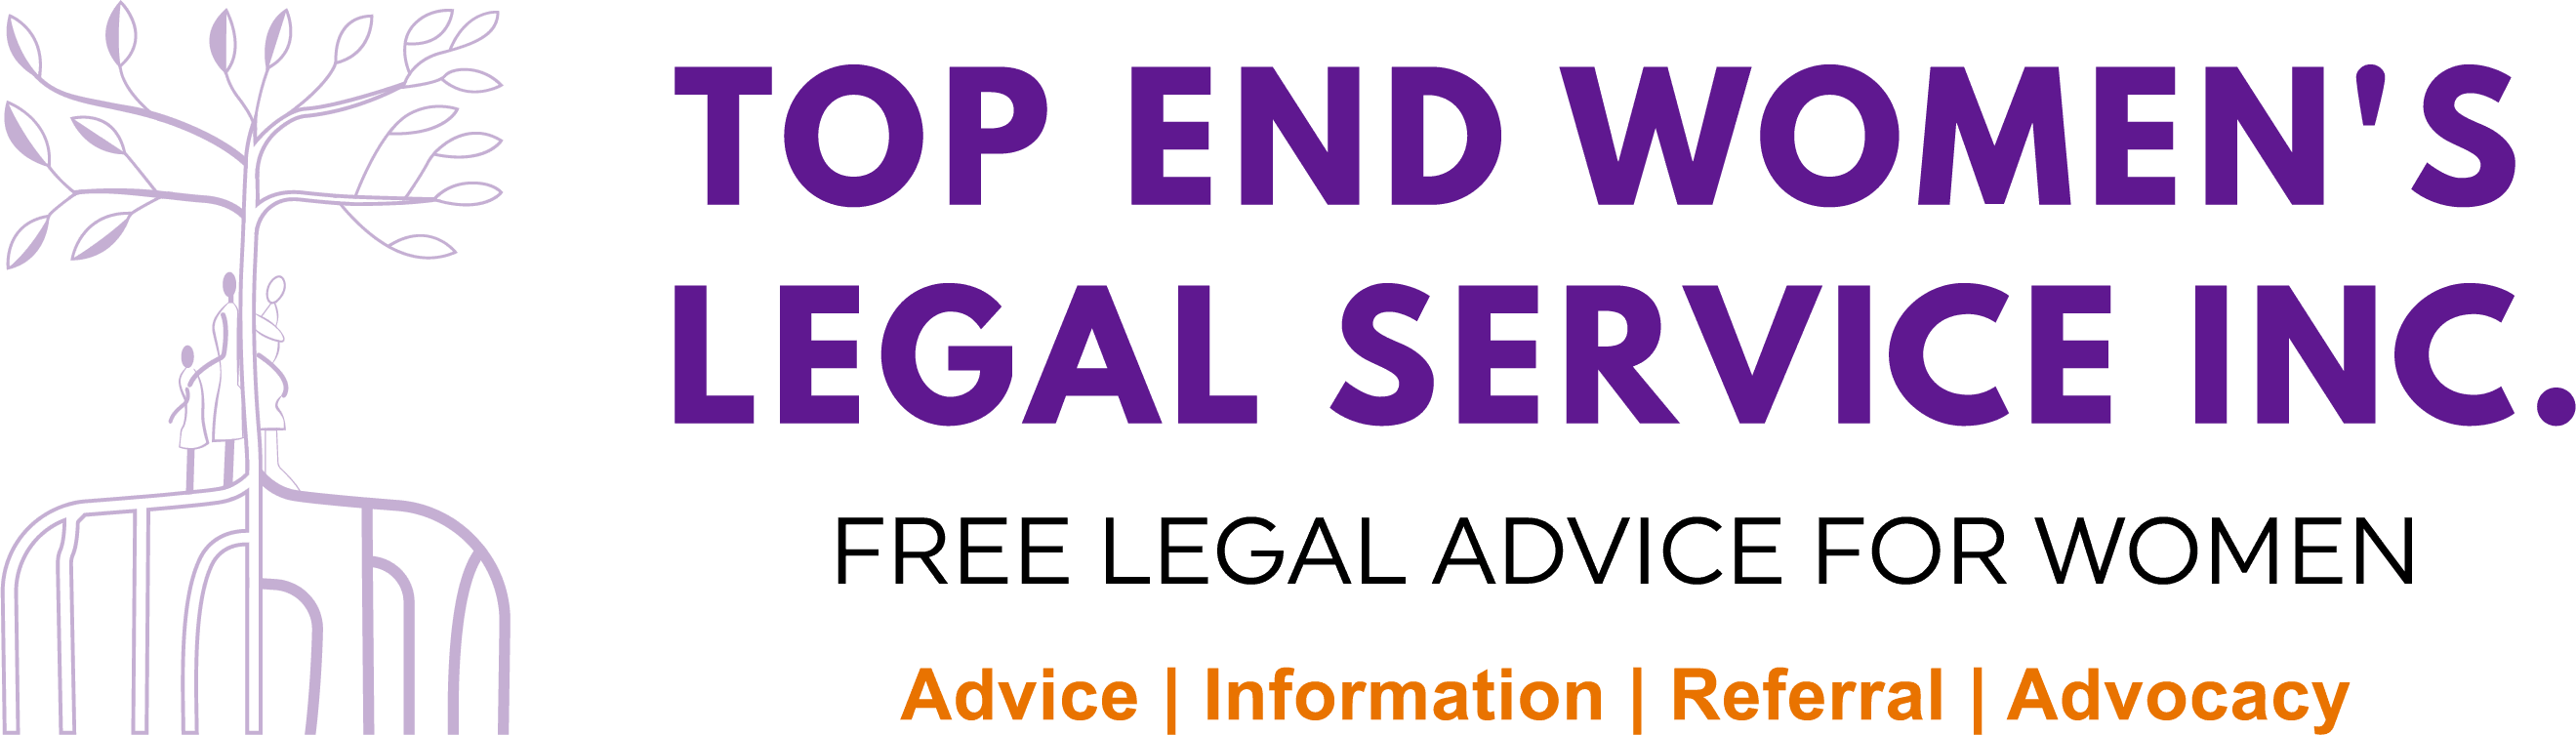 Top End Women’s Legal Service (TEWLS) Logo